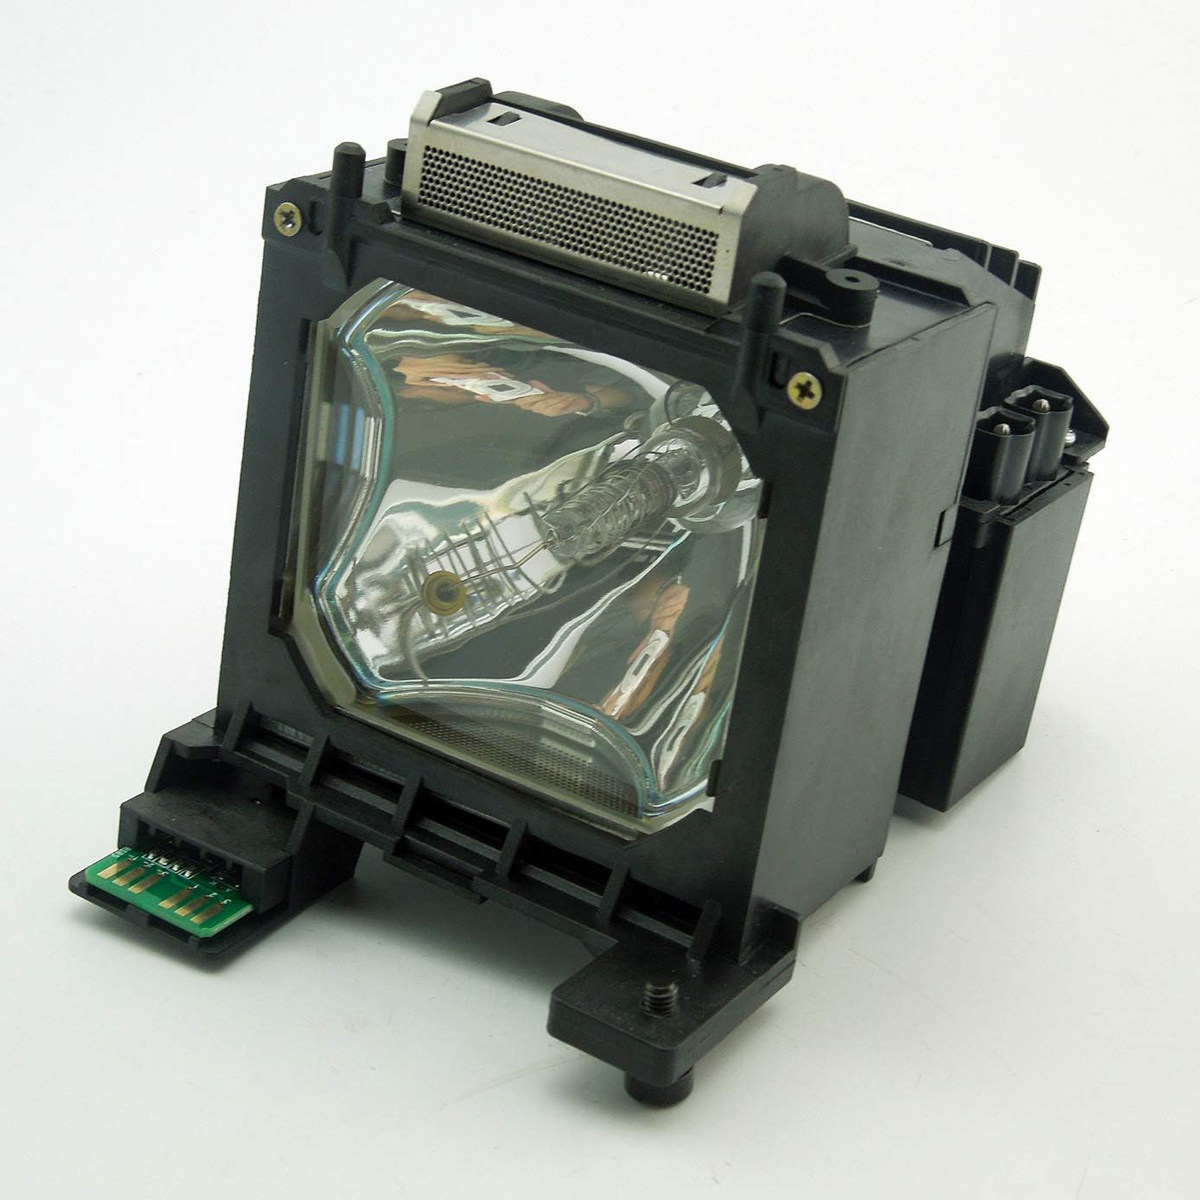 Replacement Projector lamp MT60LP/50022277 For NEC MT860 MT1060 MT1065